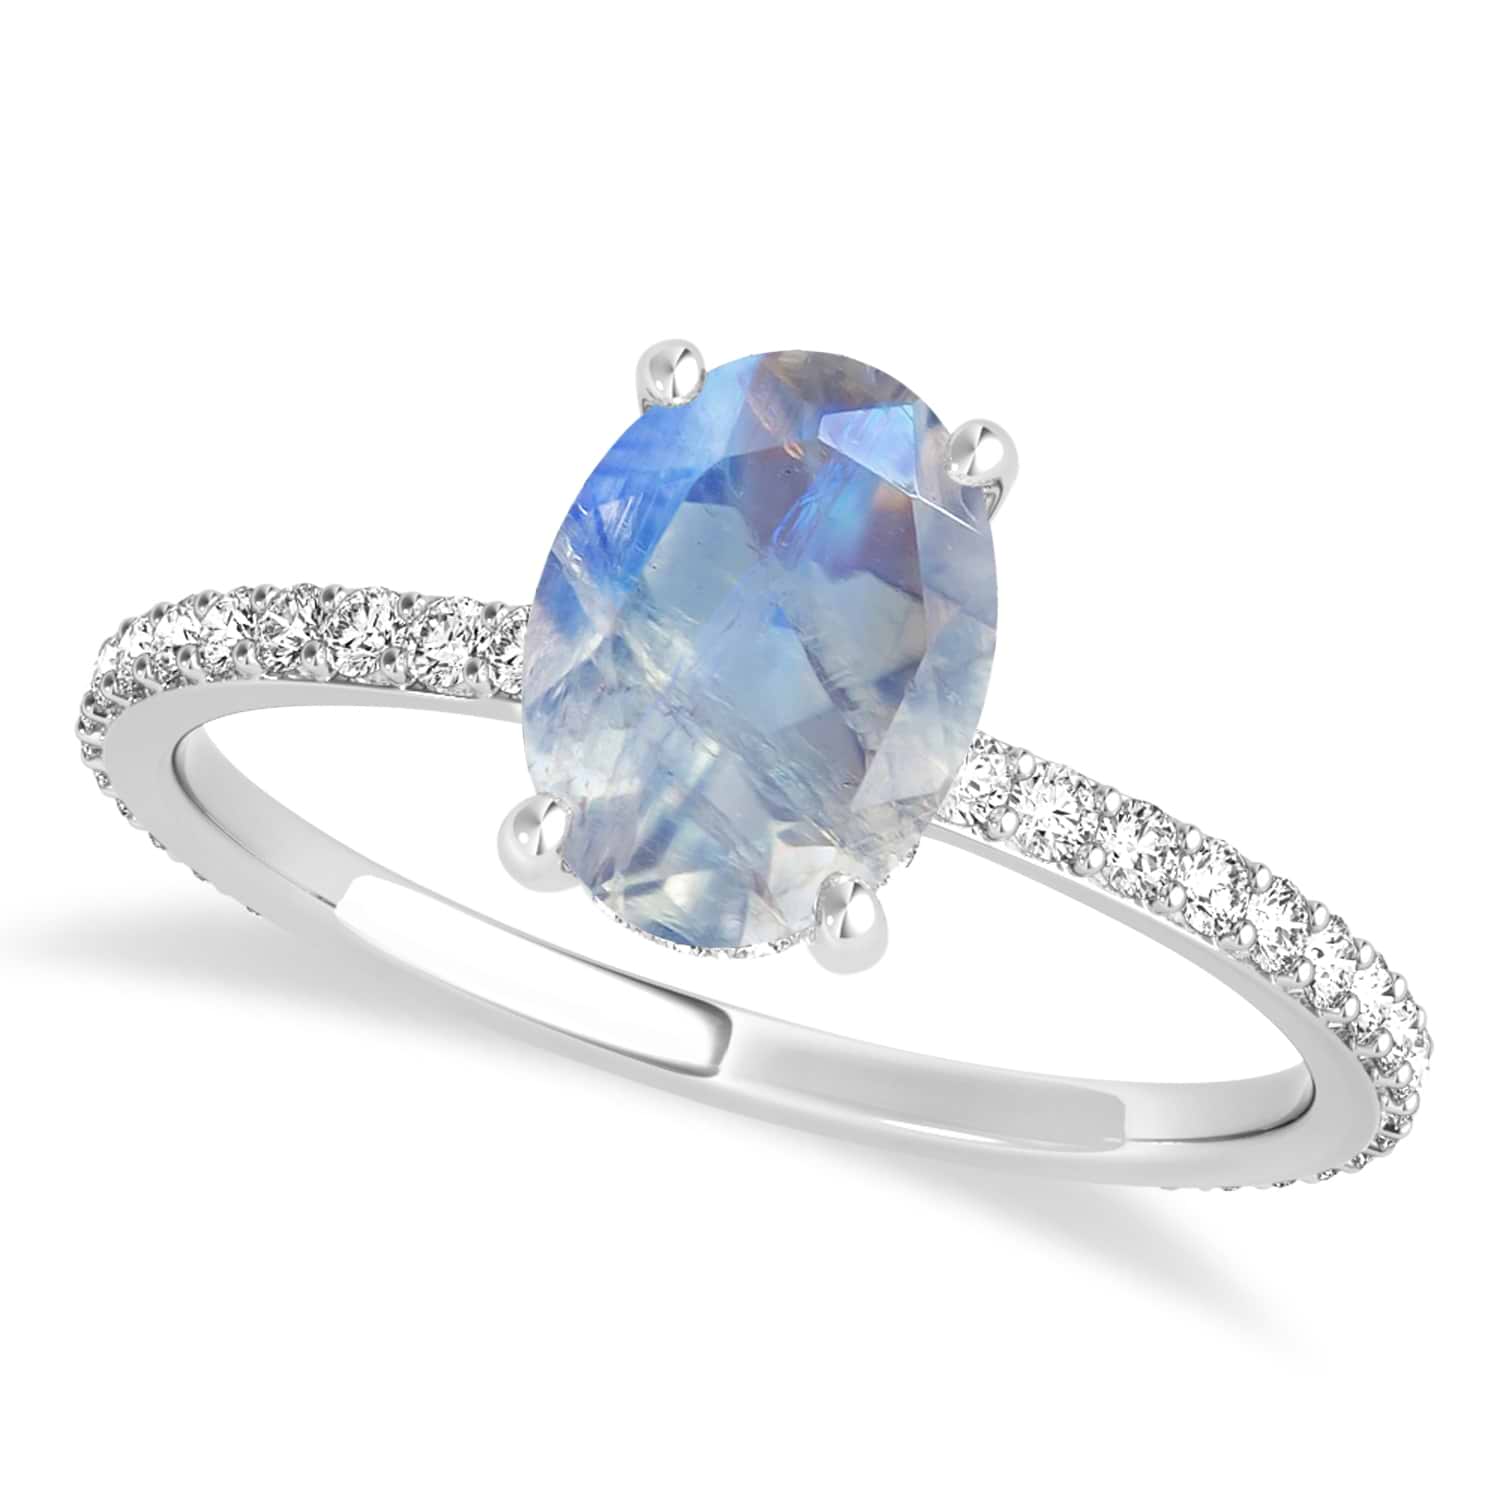 Oval Moonstone & Diamond Hidden Halo Engagement Ring Palladium (0.76ct)